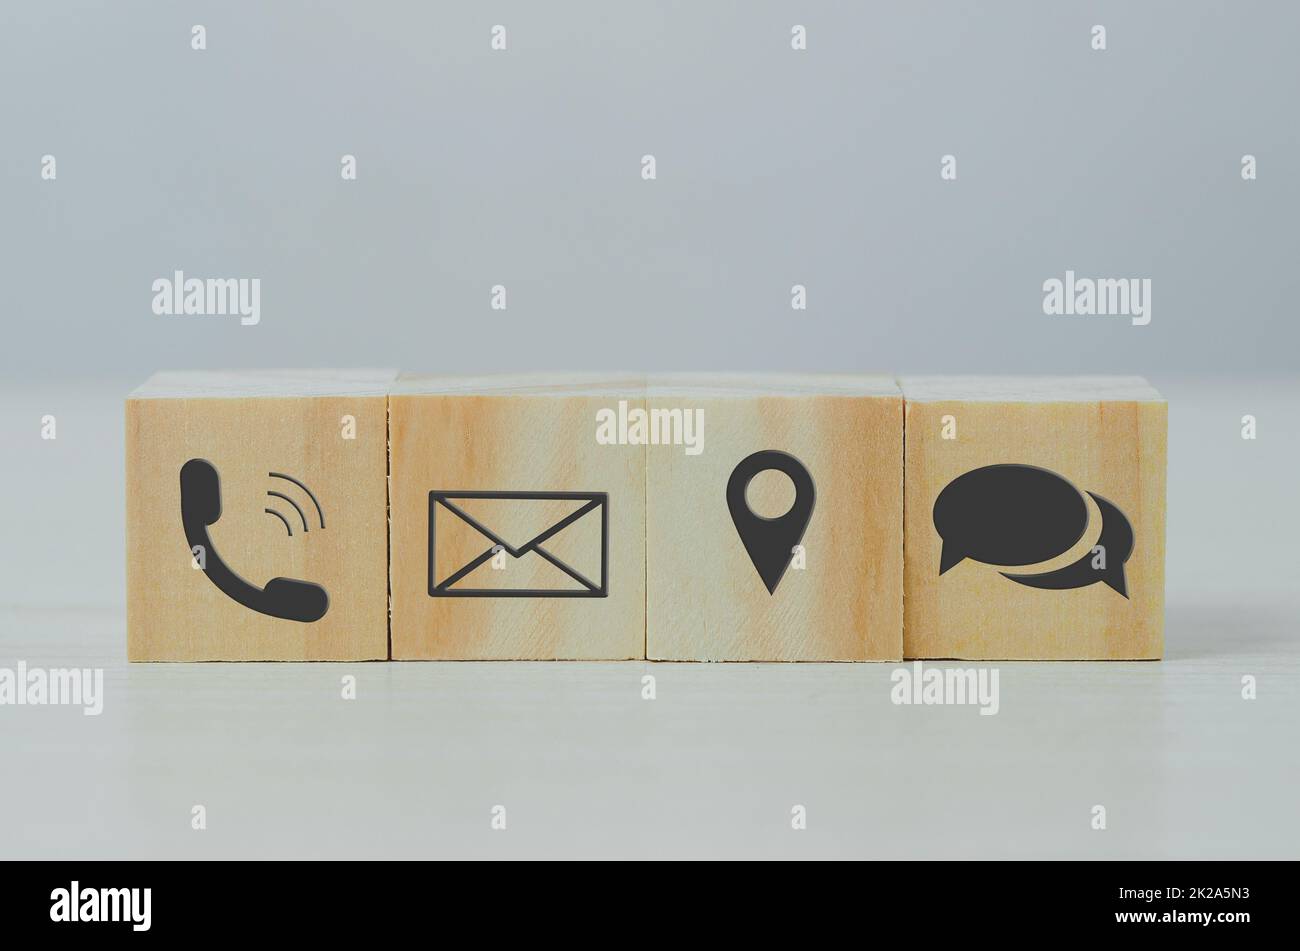 cubo de madera bloque icono letra teléfono ubicación en table.Business comunicación y concepto de red social. Foto de stock